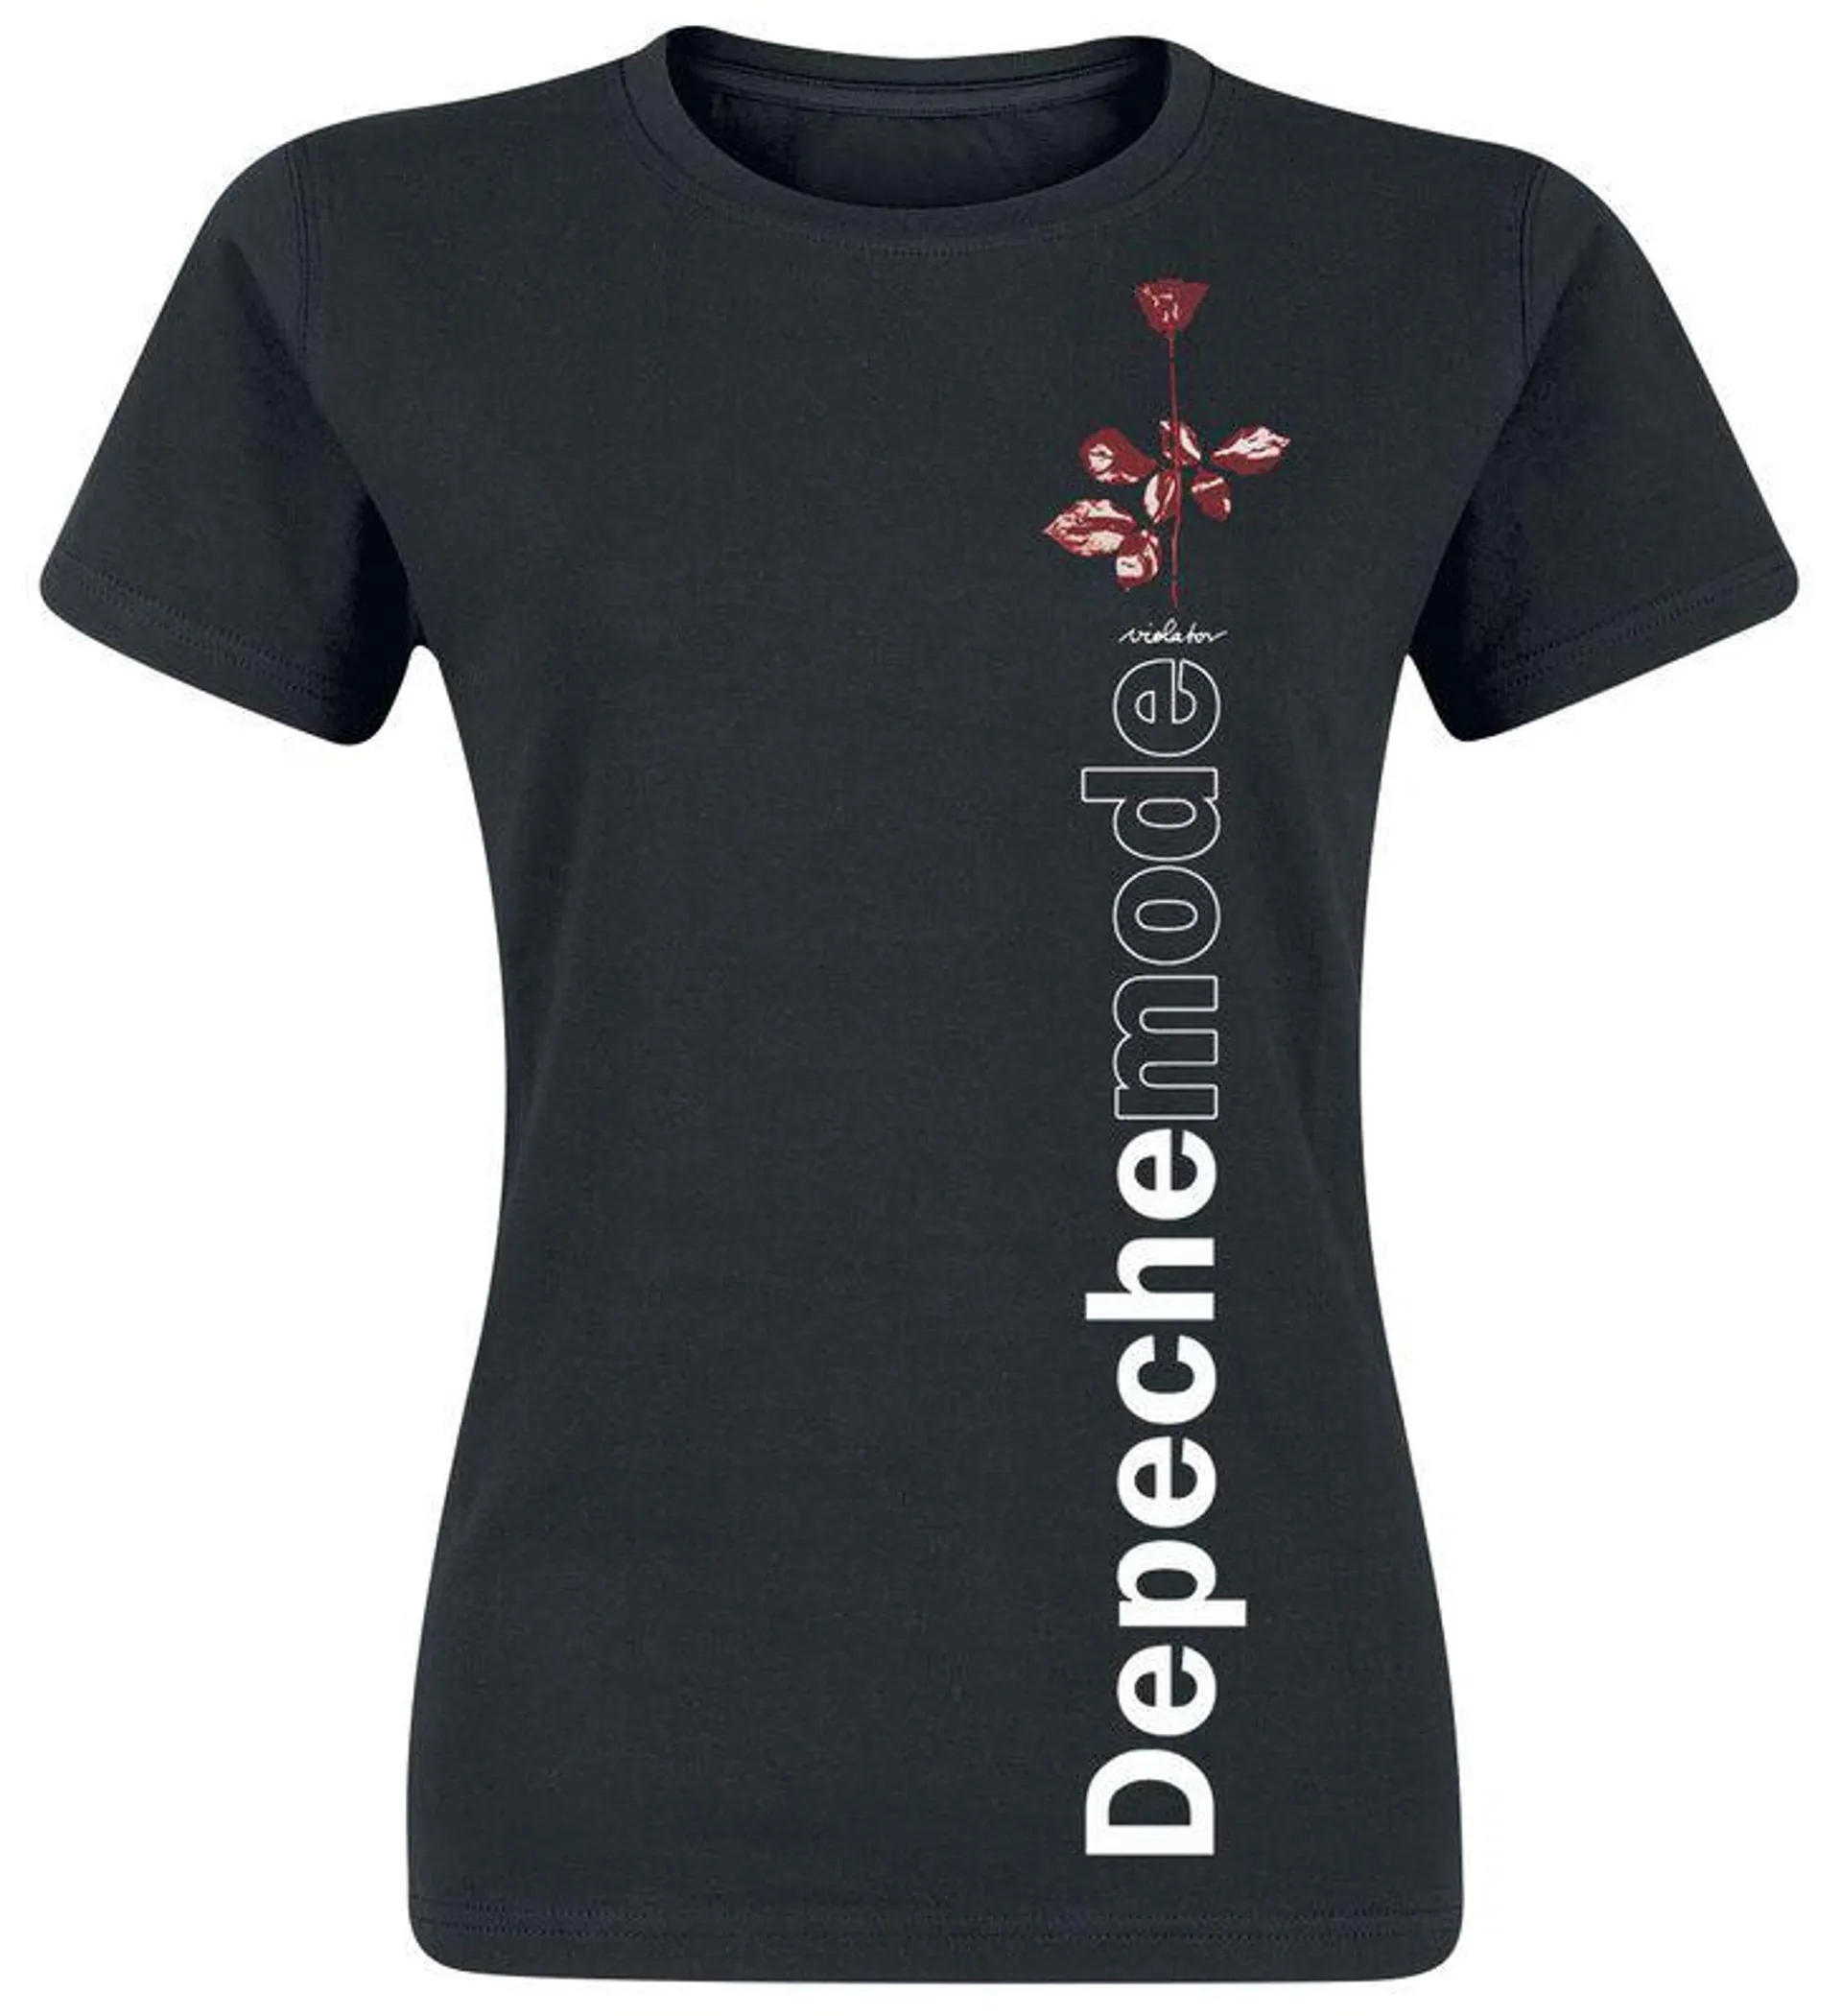 "Violator Side Rose" Camiseta Negro de Depeche Mode